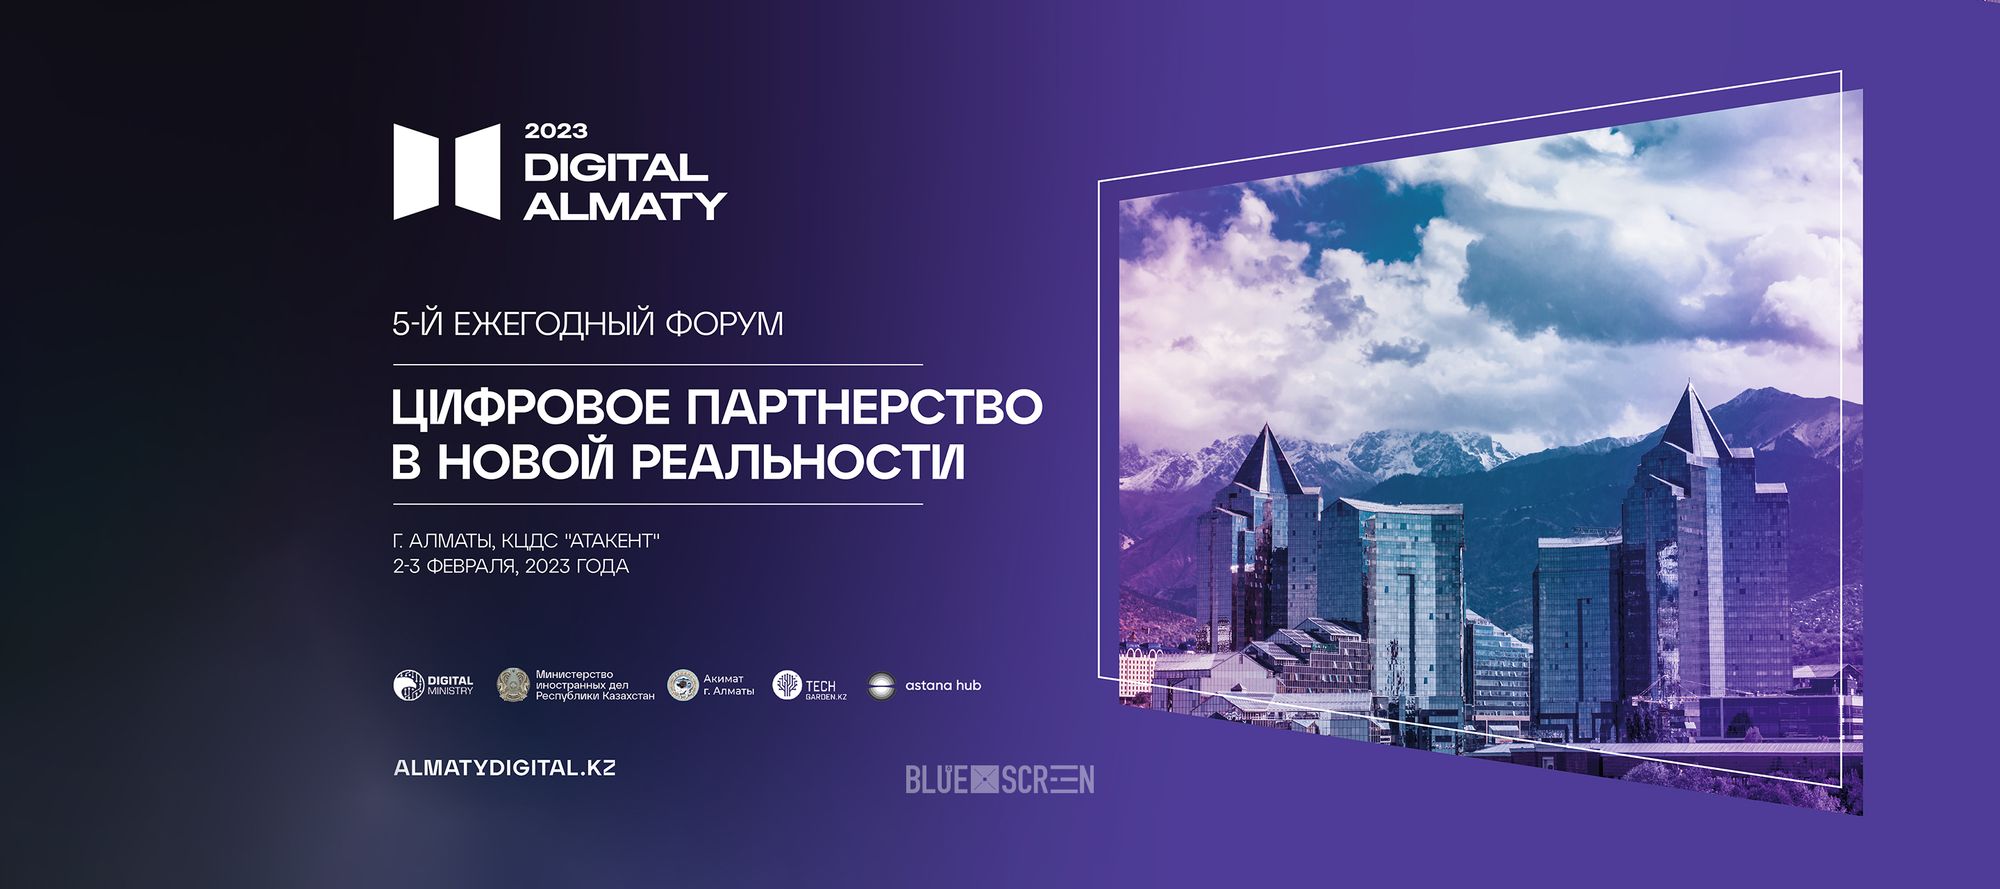 Digital Almaty 2023: Развитие рынка страхования за счёт цифровых решений